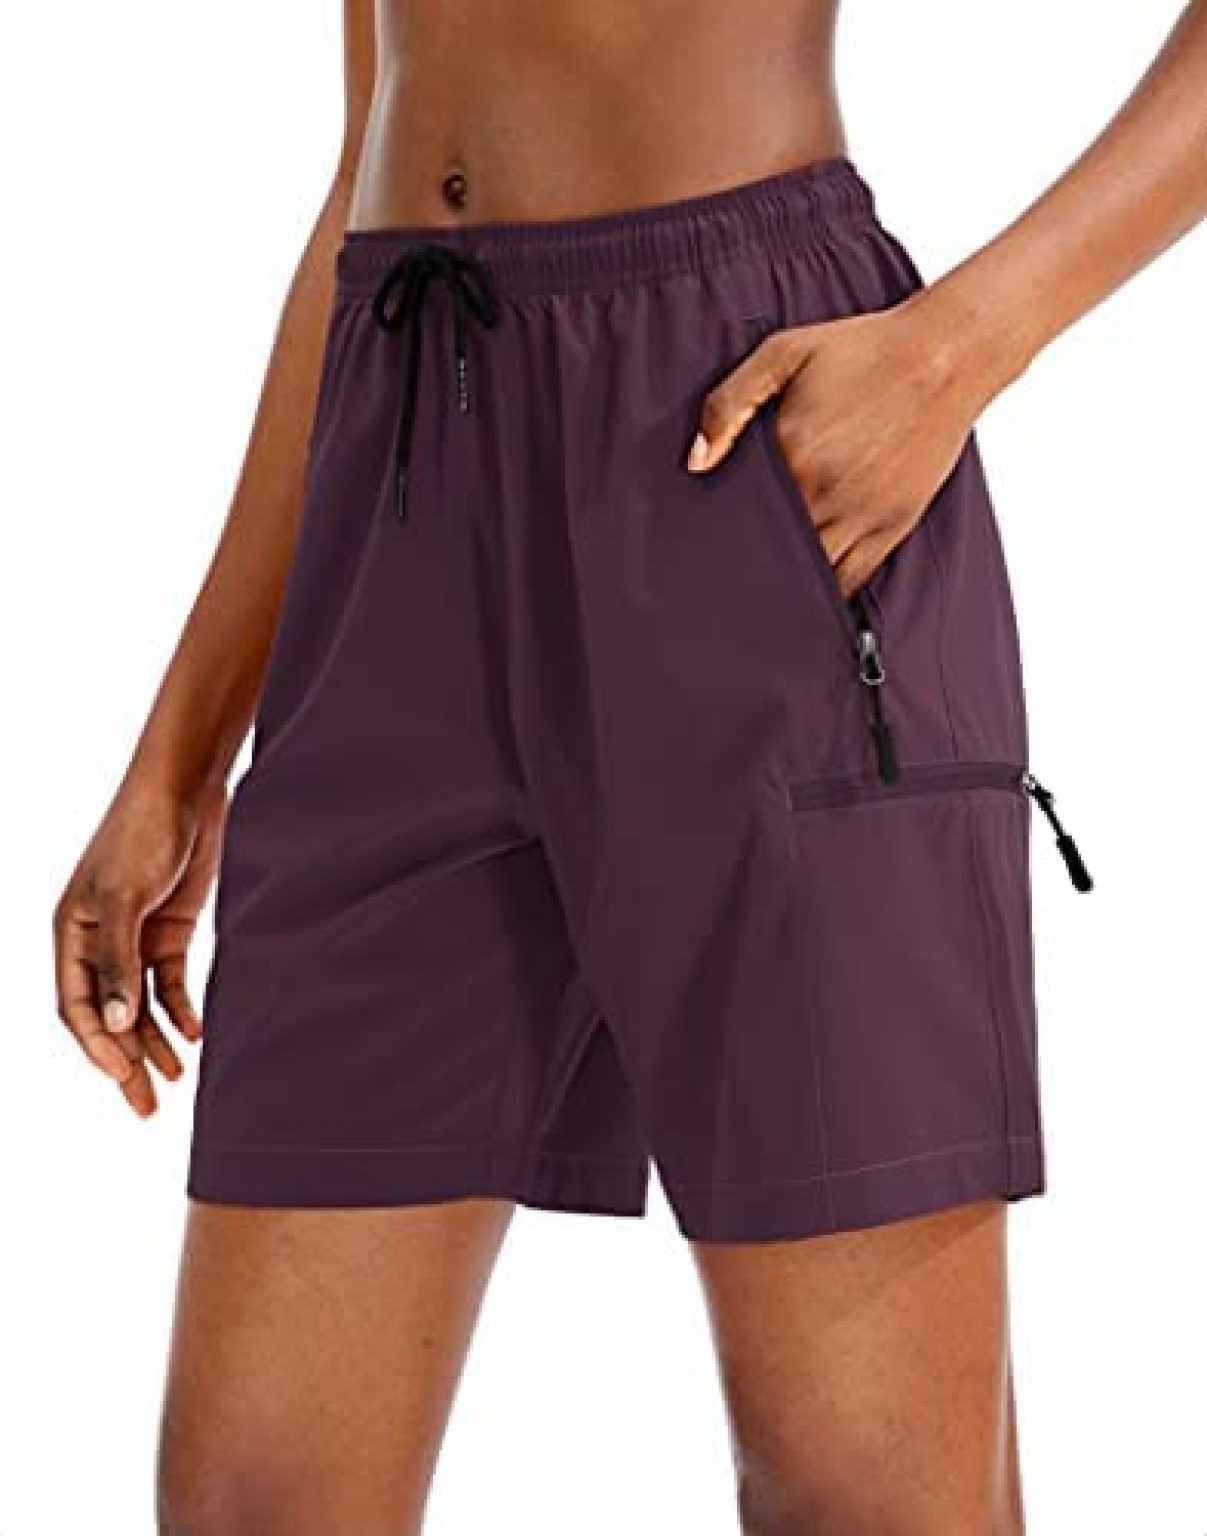 SANTINY Women's Hiking Cargo Shorts Quick Dry Lightweight Summer Shorts ...